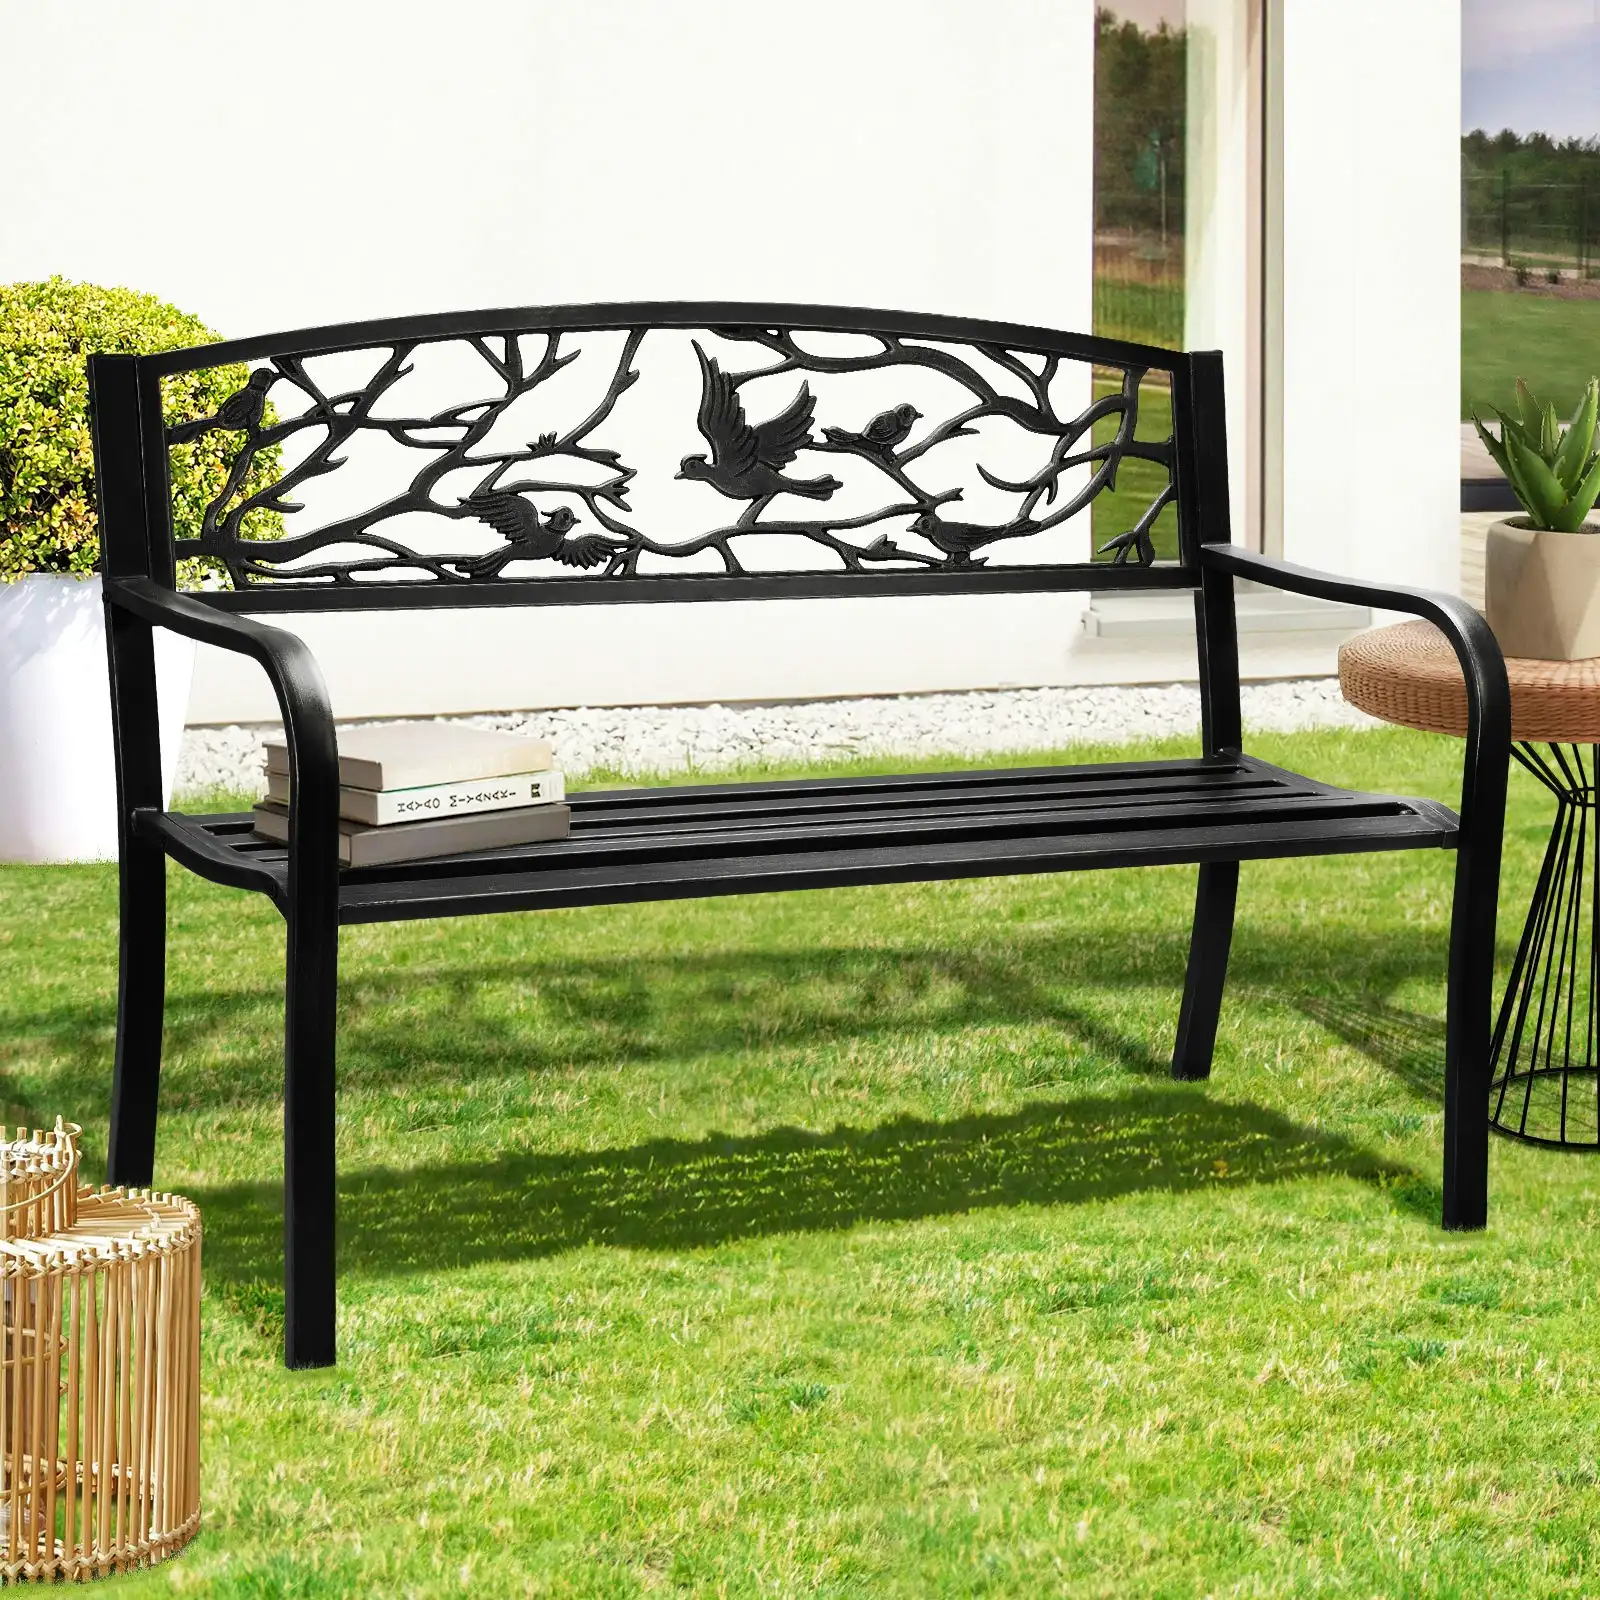 Livsip Garden Bench Seat Outdoor Chair Furniture Backyard Patio Bird Pattern